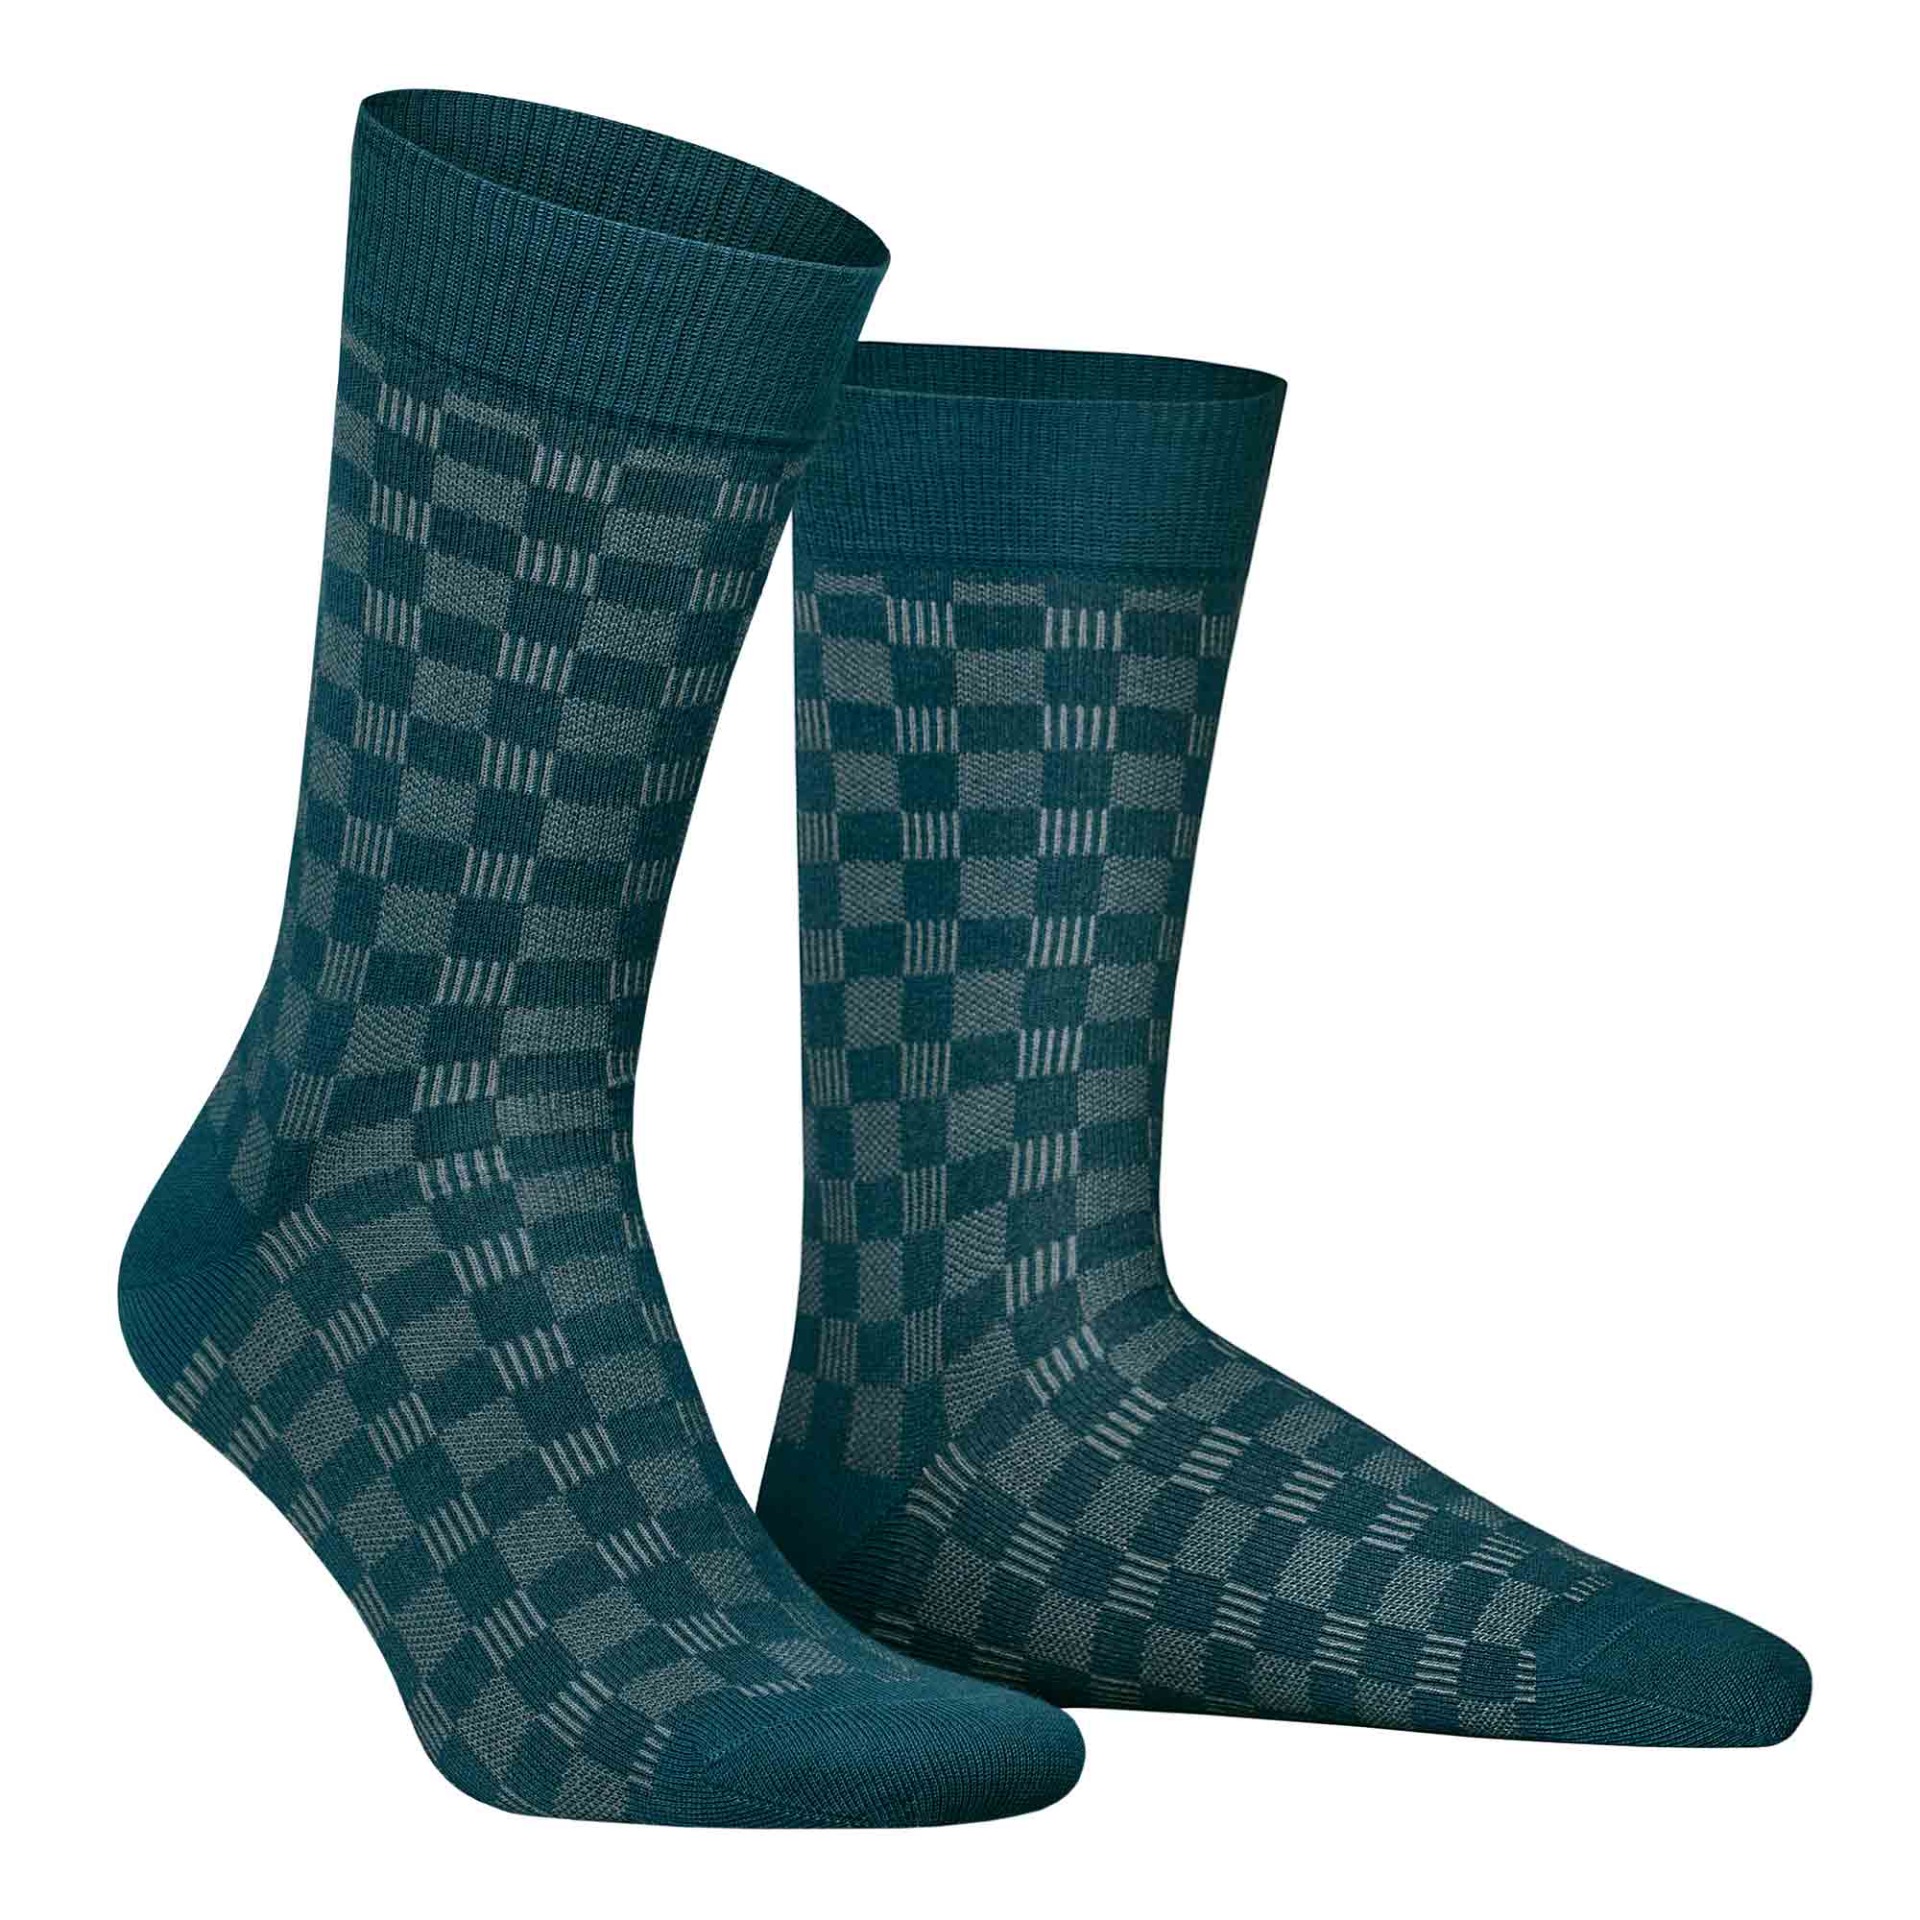 HUDSON Herren BOARD -  43/46 - Socken mit Schachbrett-Muster - Capri blue 0111 (Blau)